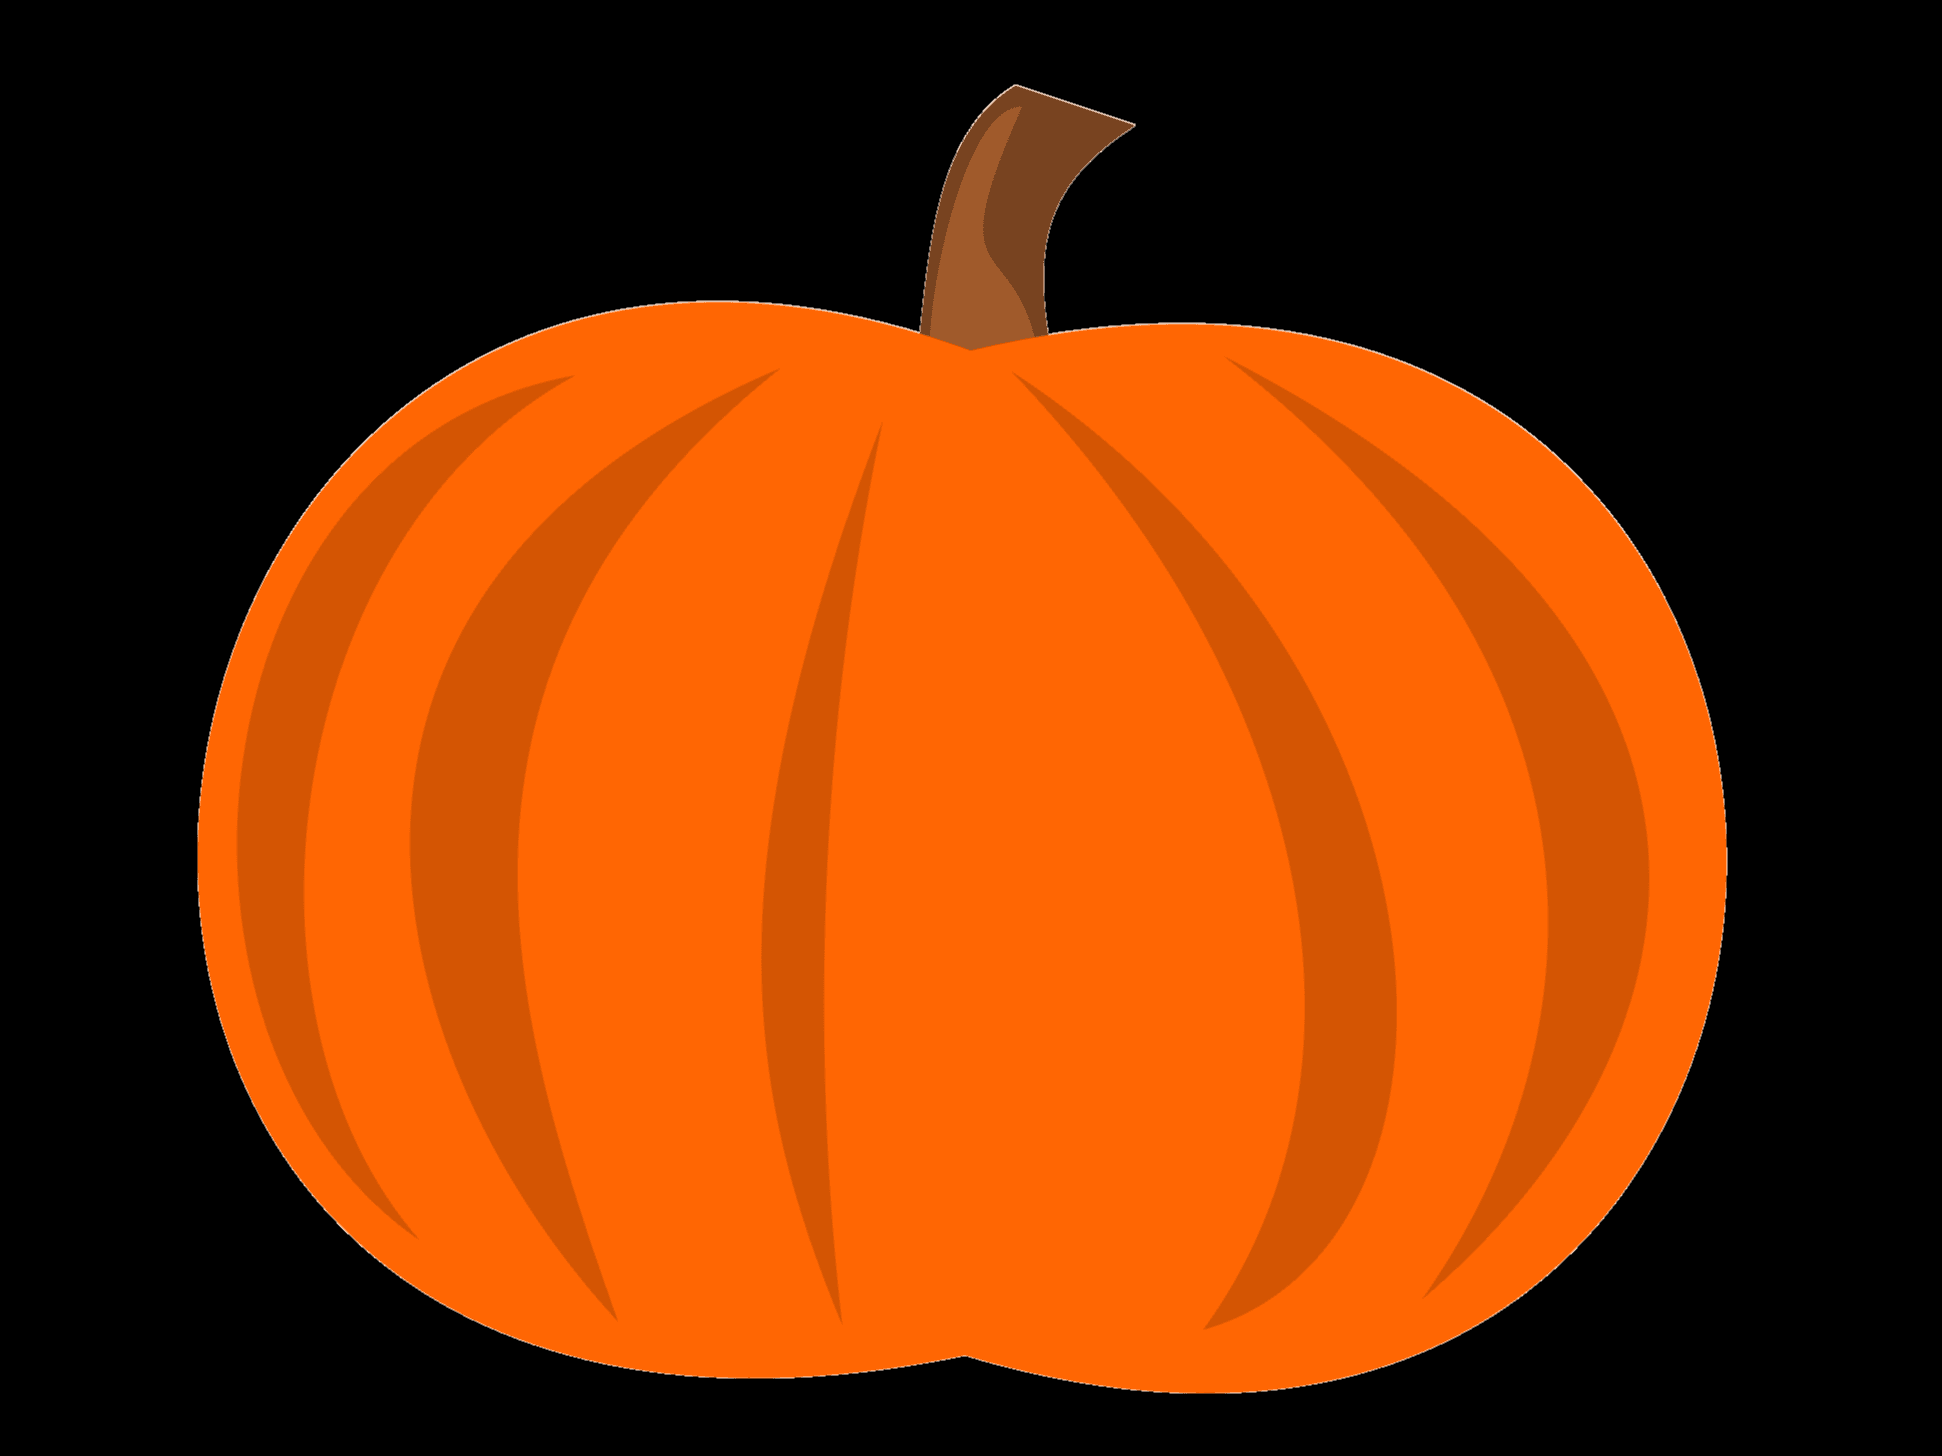 Carve a Pumpkin - H.W.H 2